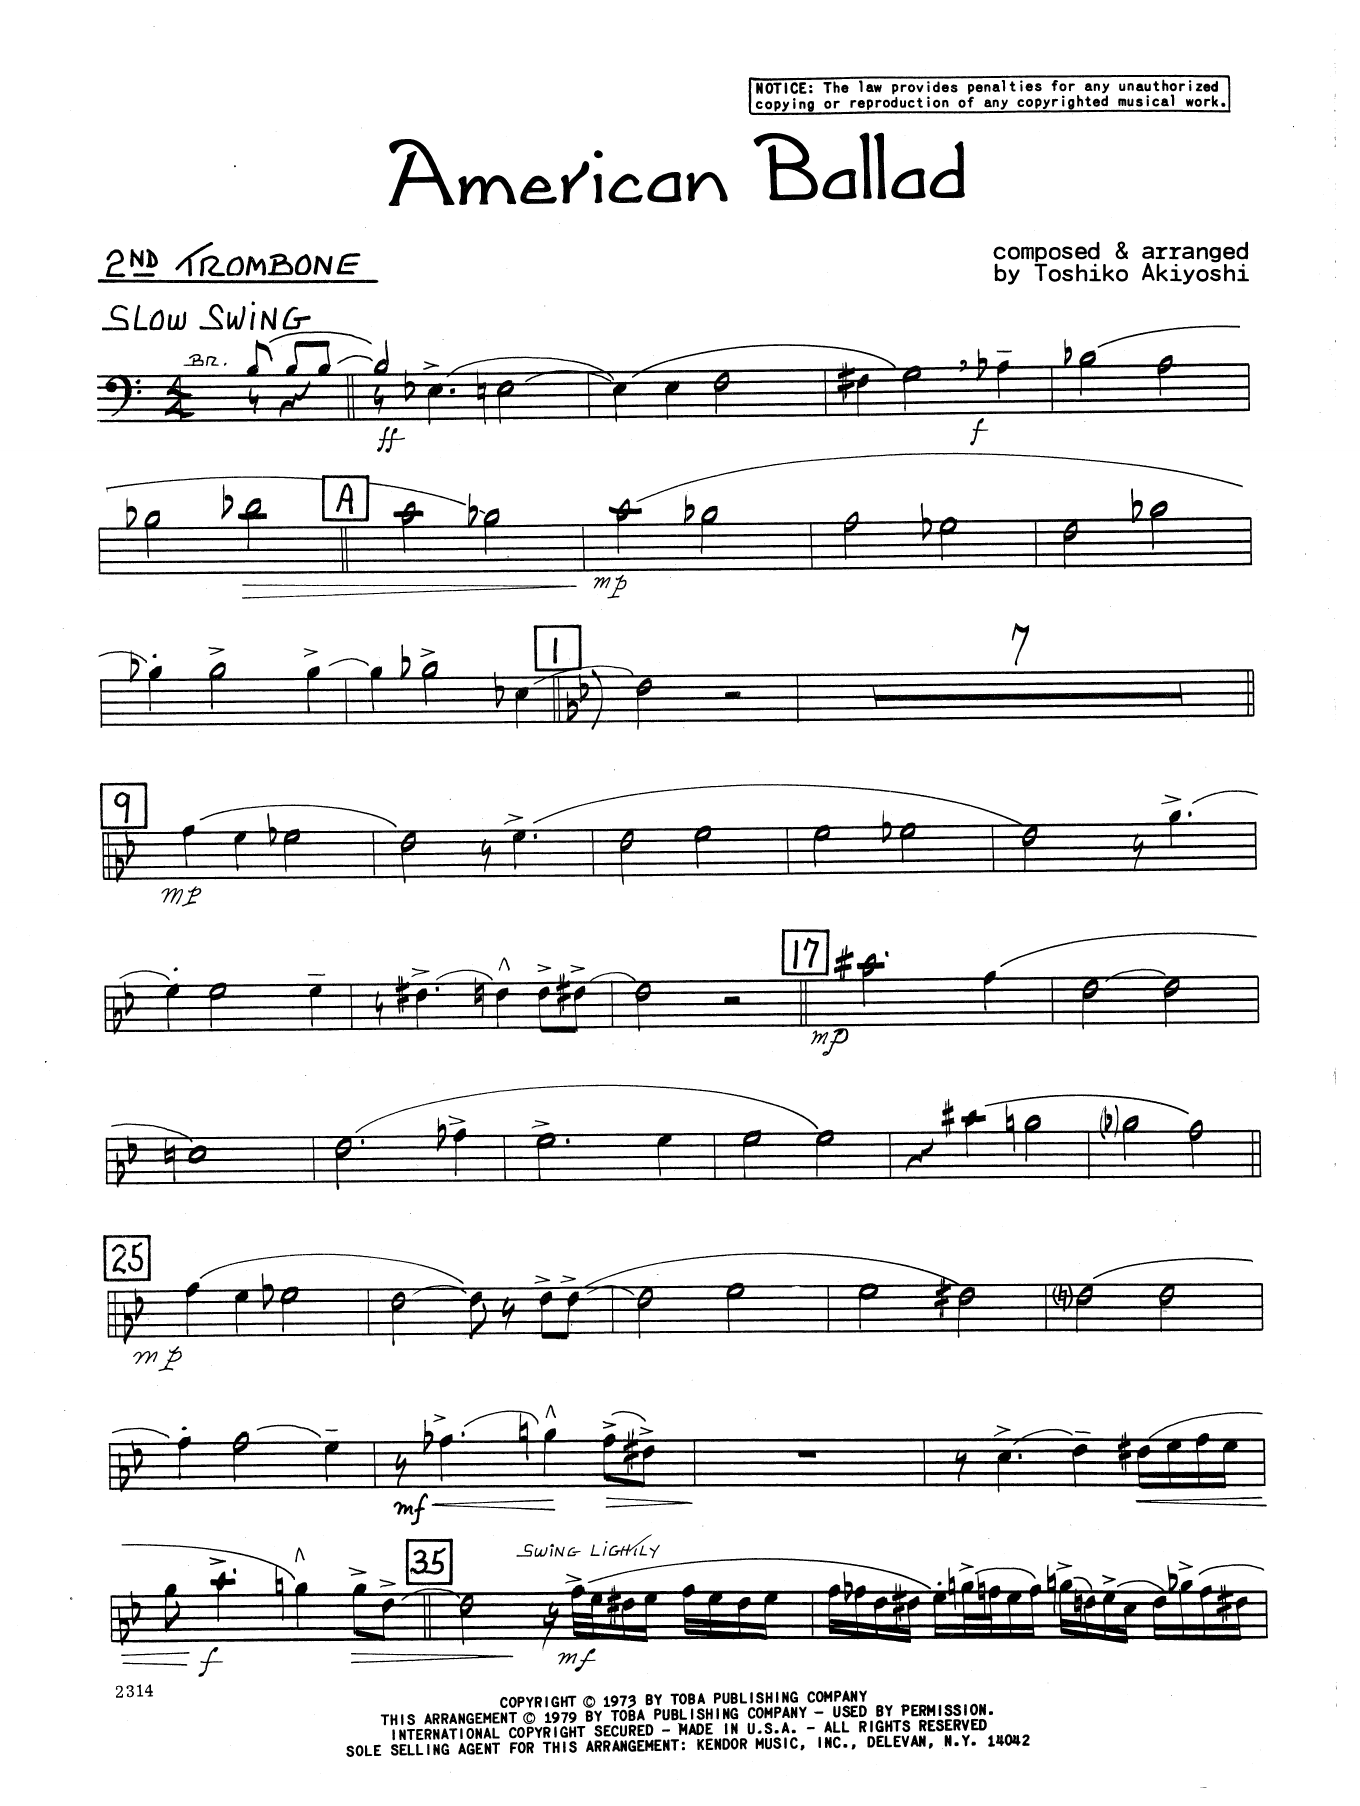 Download Toshiko Akiyoshi American Ballad - 2nd Trombone Sheet Music